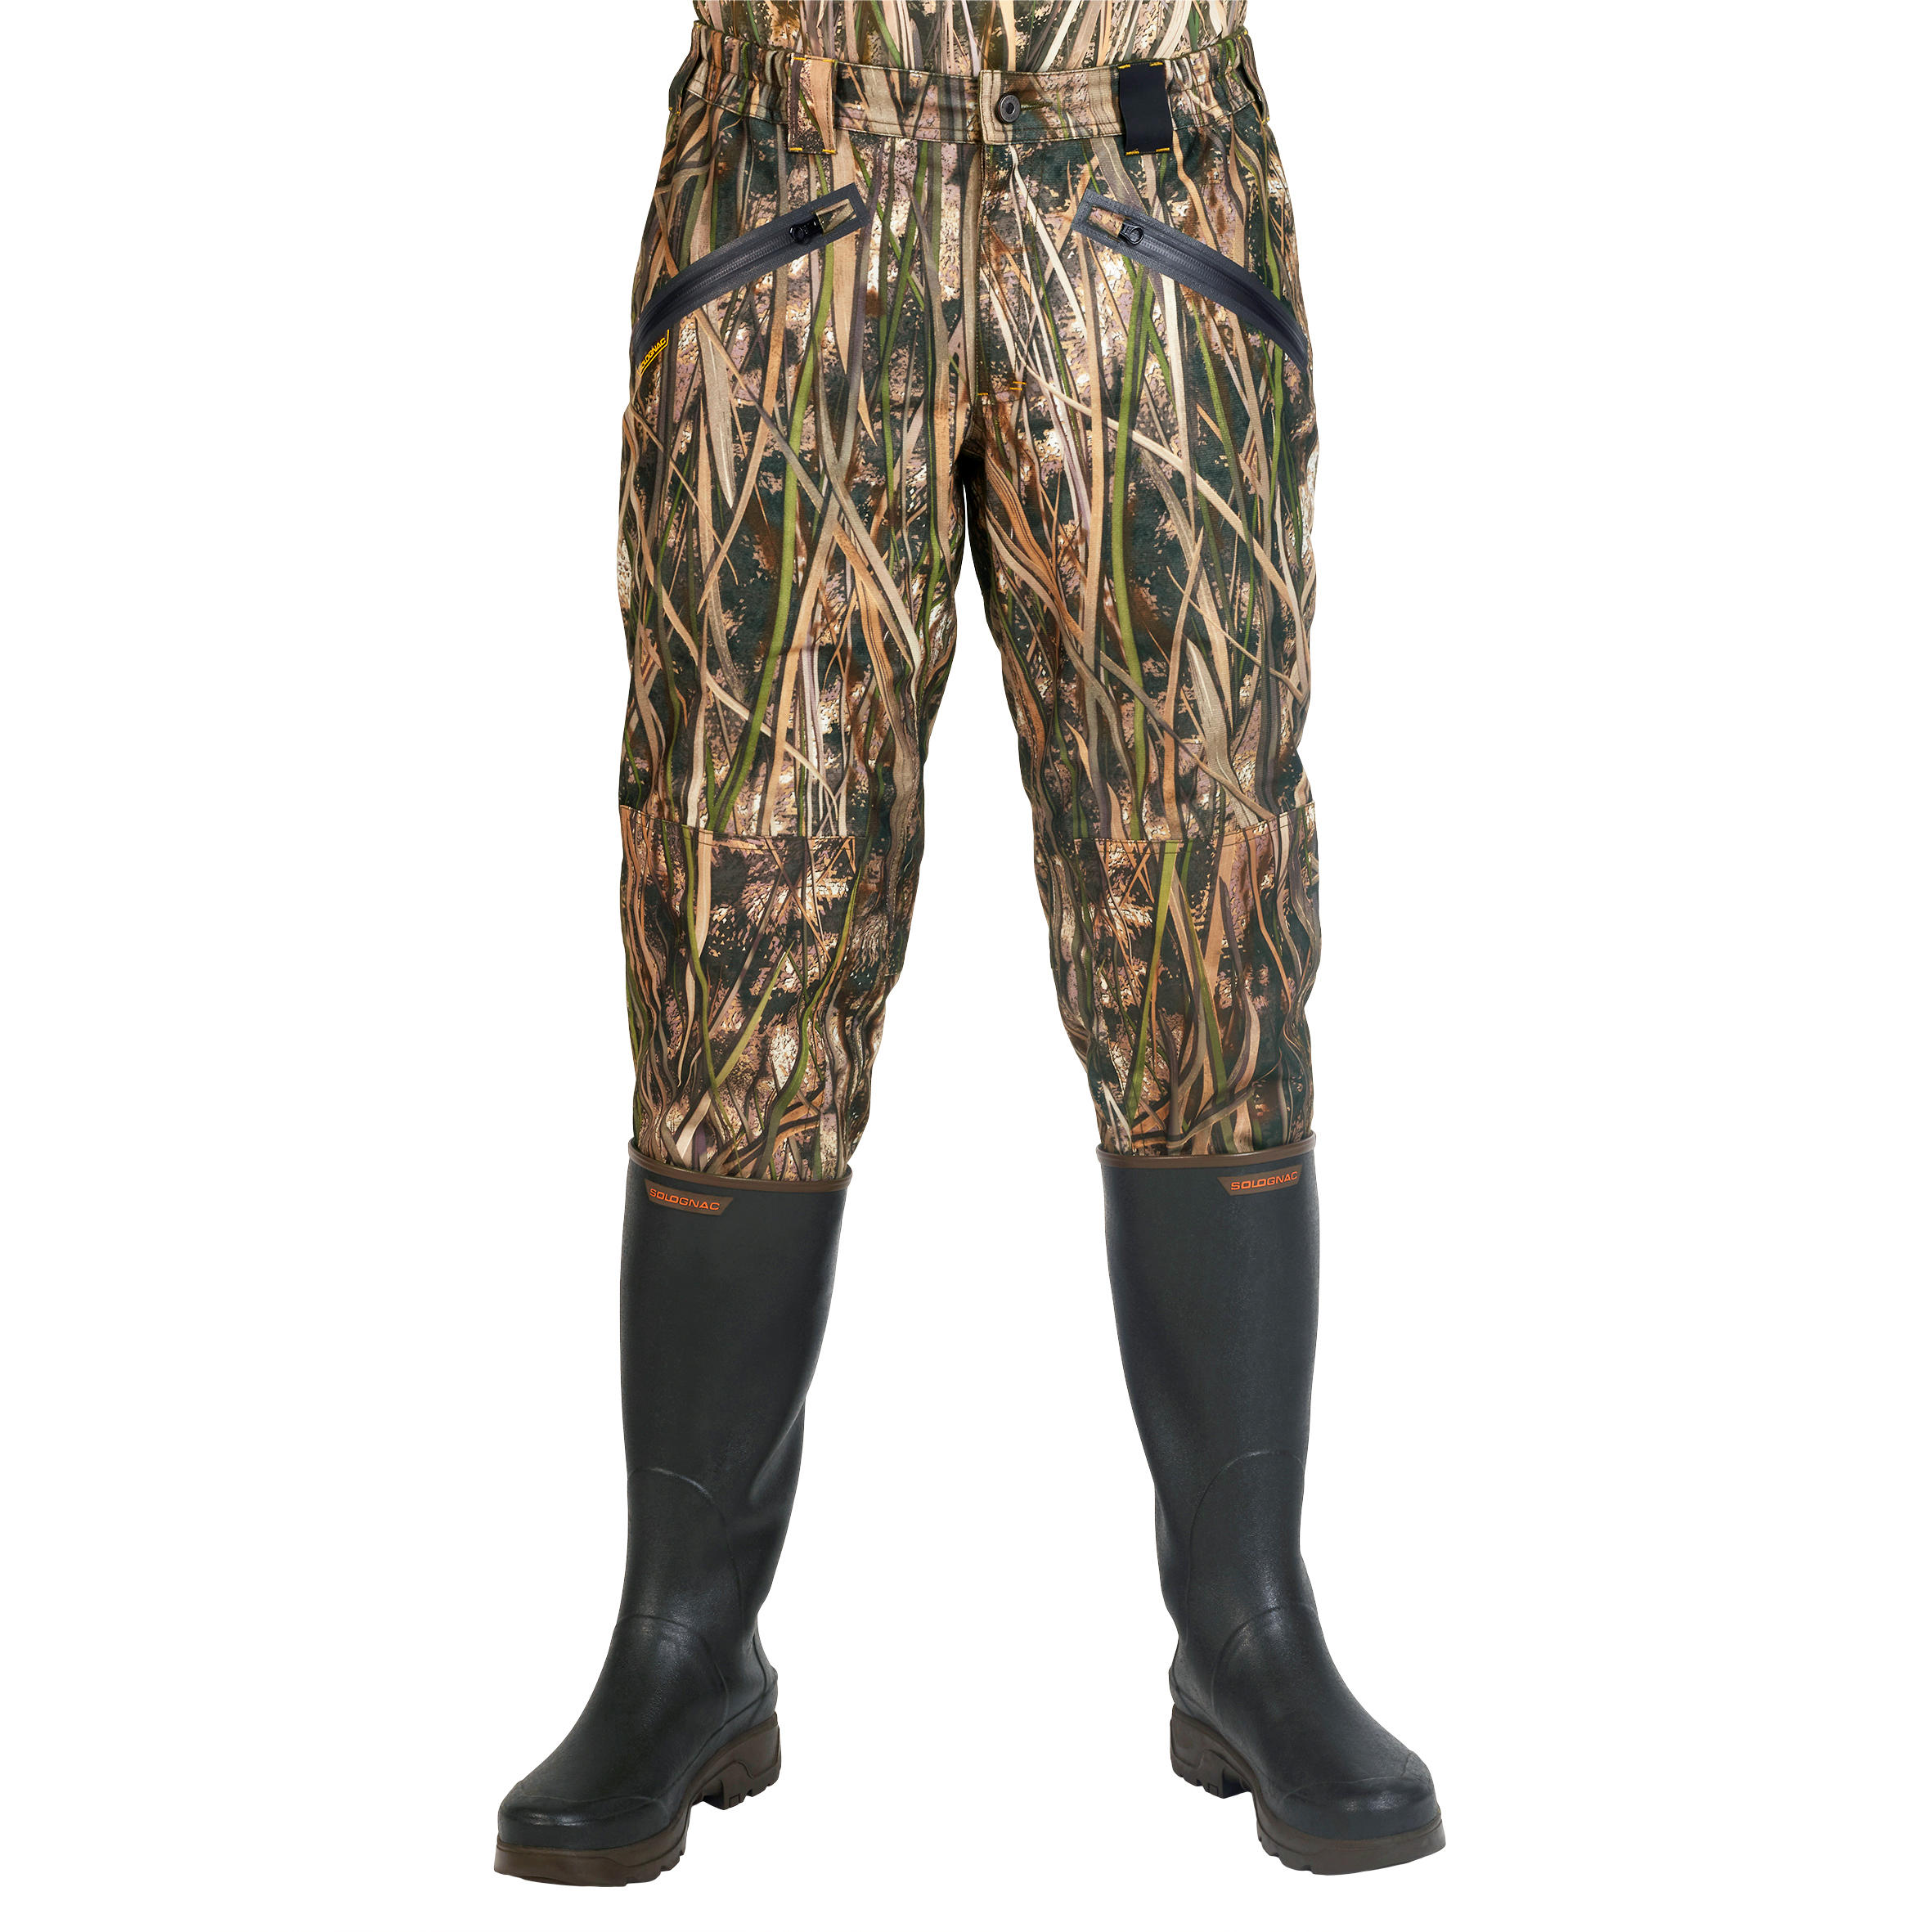 500 Warm Waterproof Country Sport Trousers - Wetlands Camo 2/10